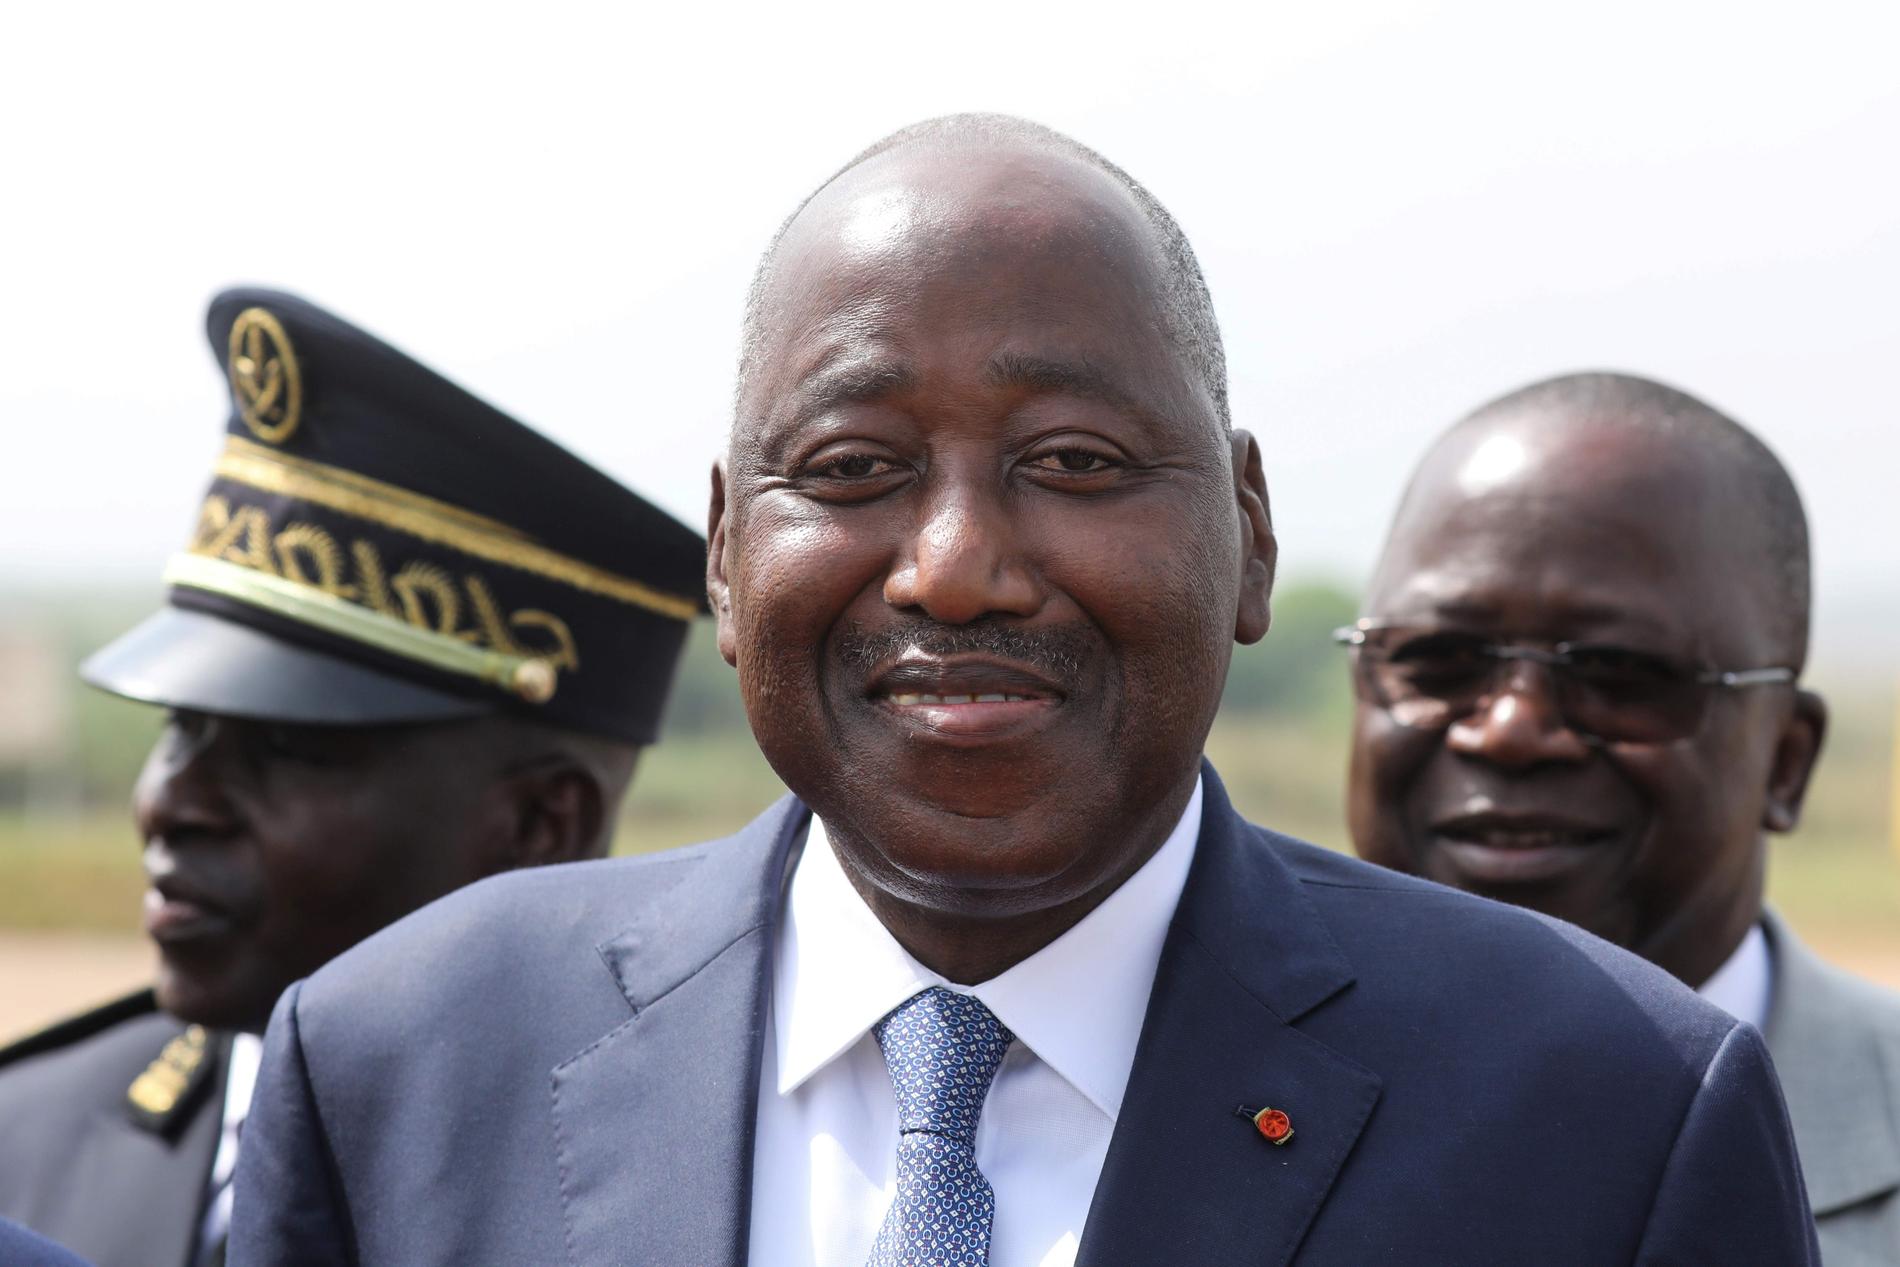 Ivorianske premiärministern och presidentkandidaten Amadou Gon Coulibaly har gått bort. Arkivbild.